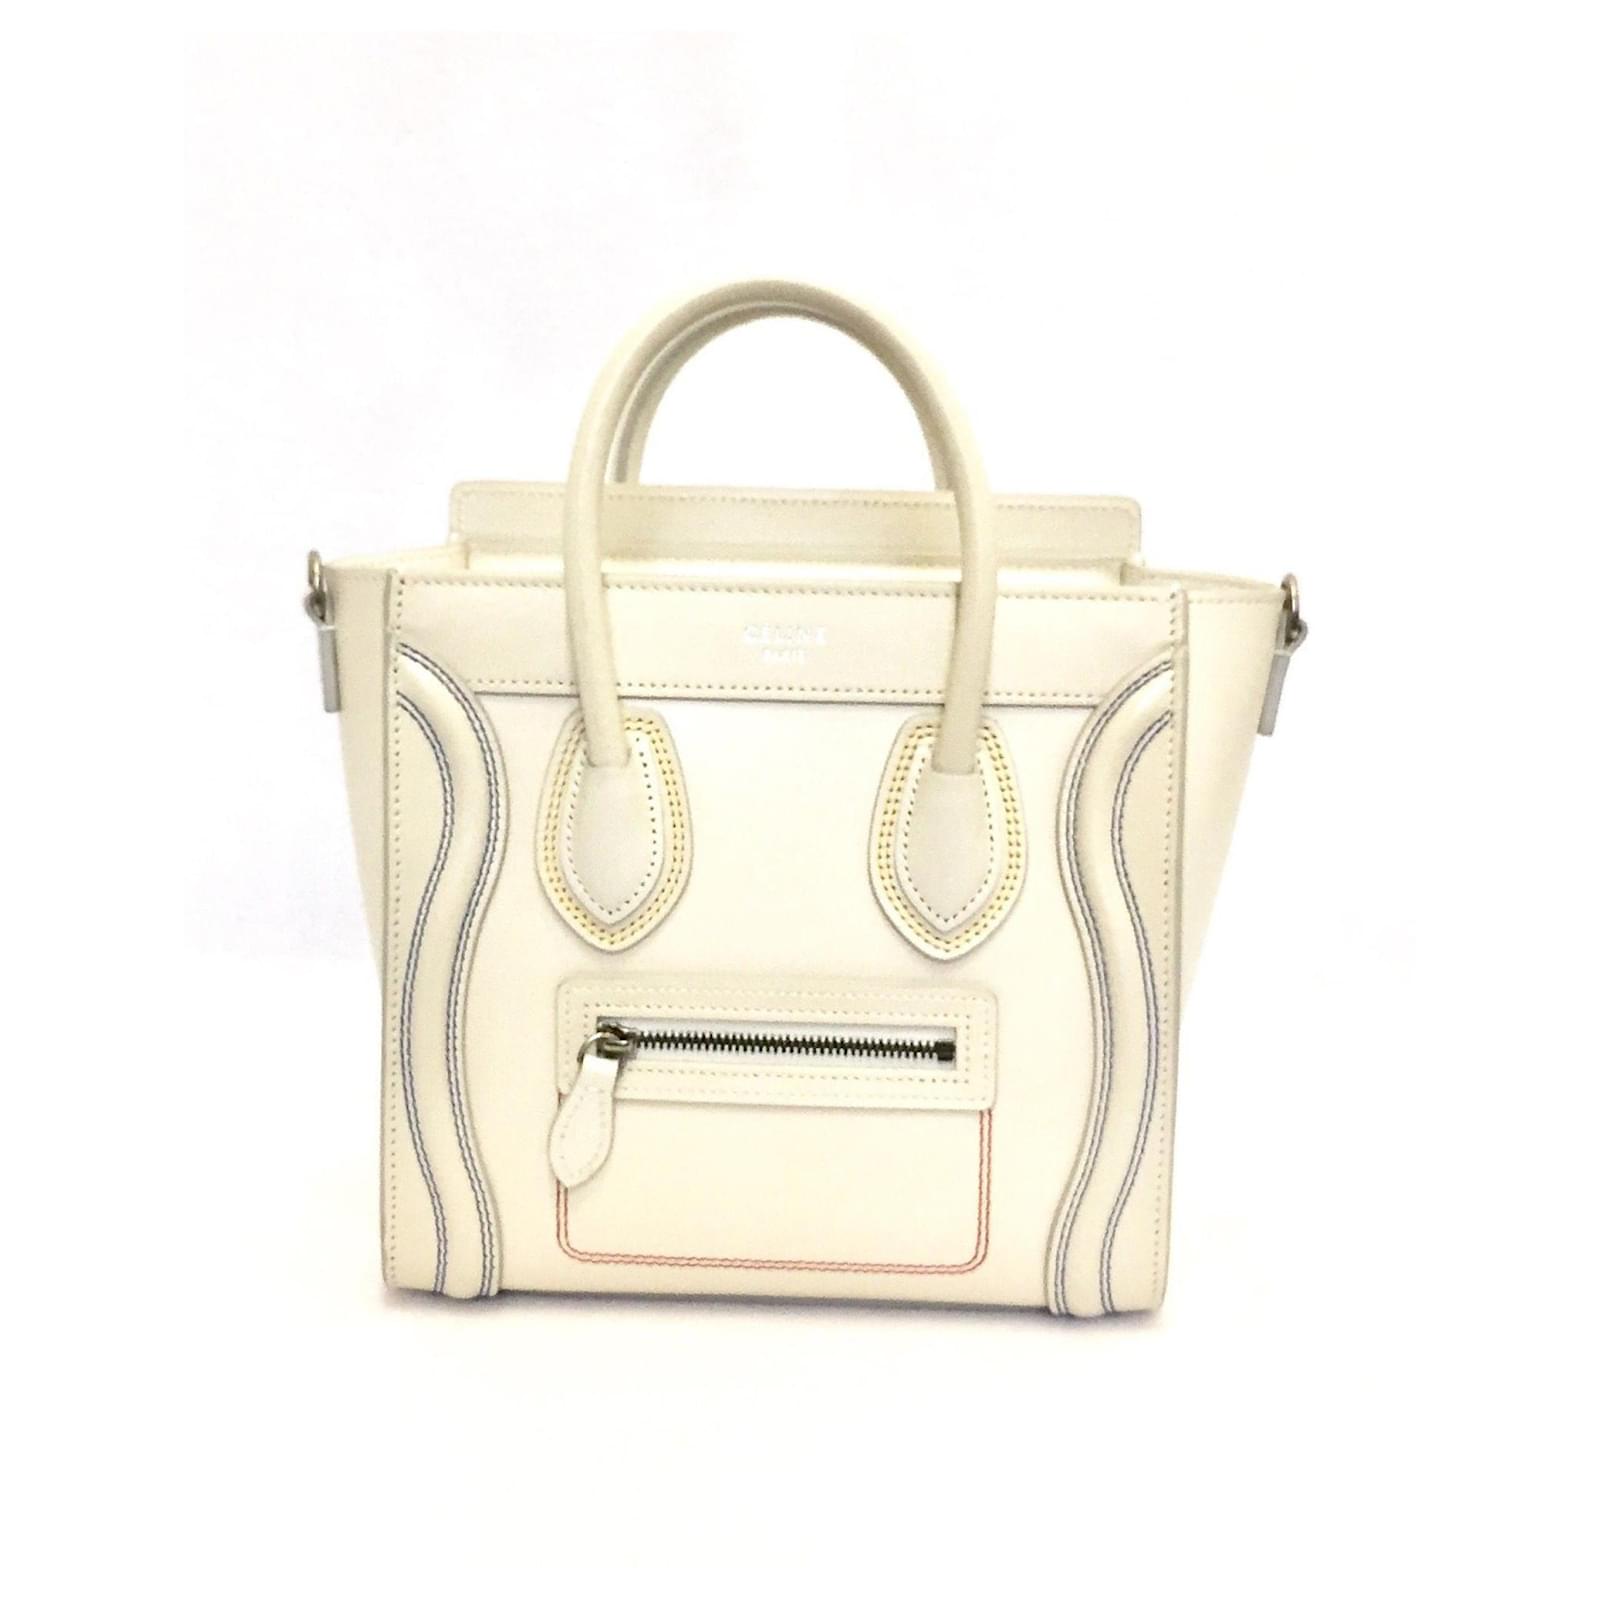 Handbag: Celine Nano